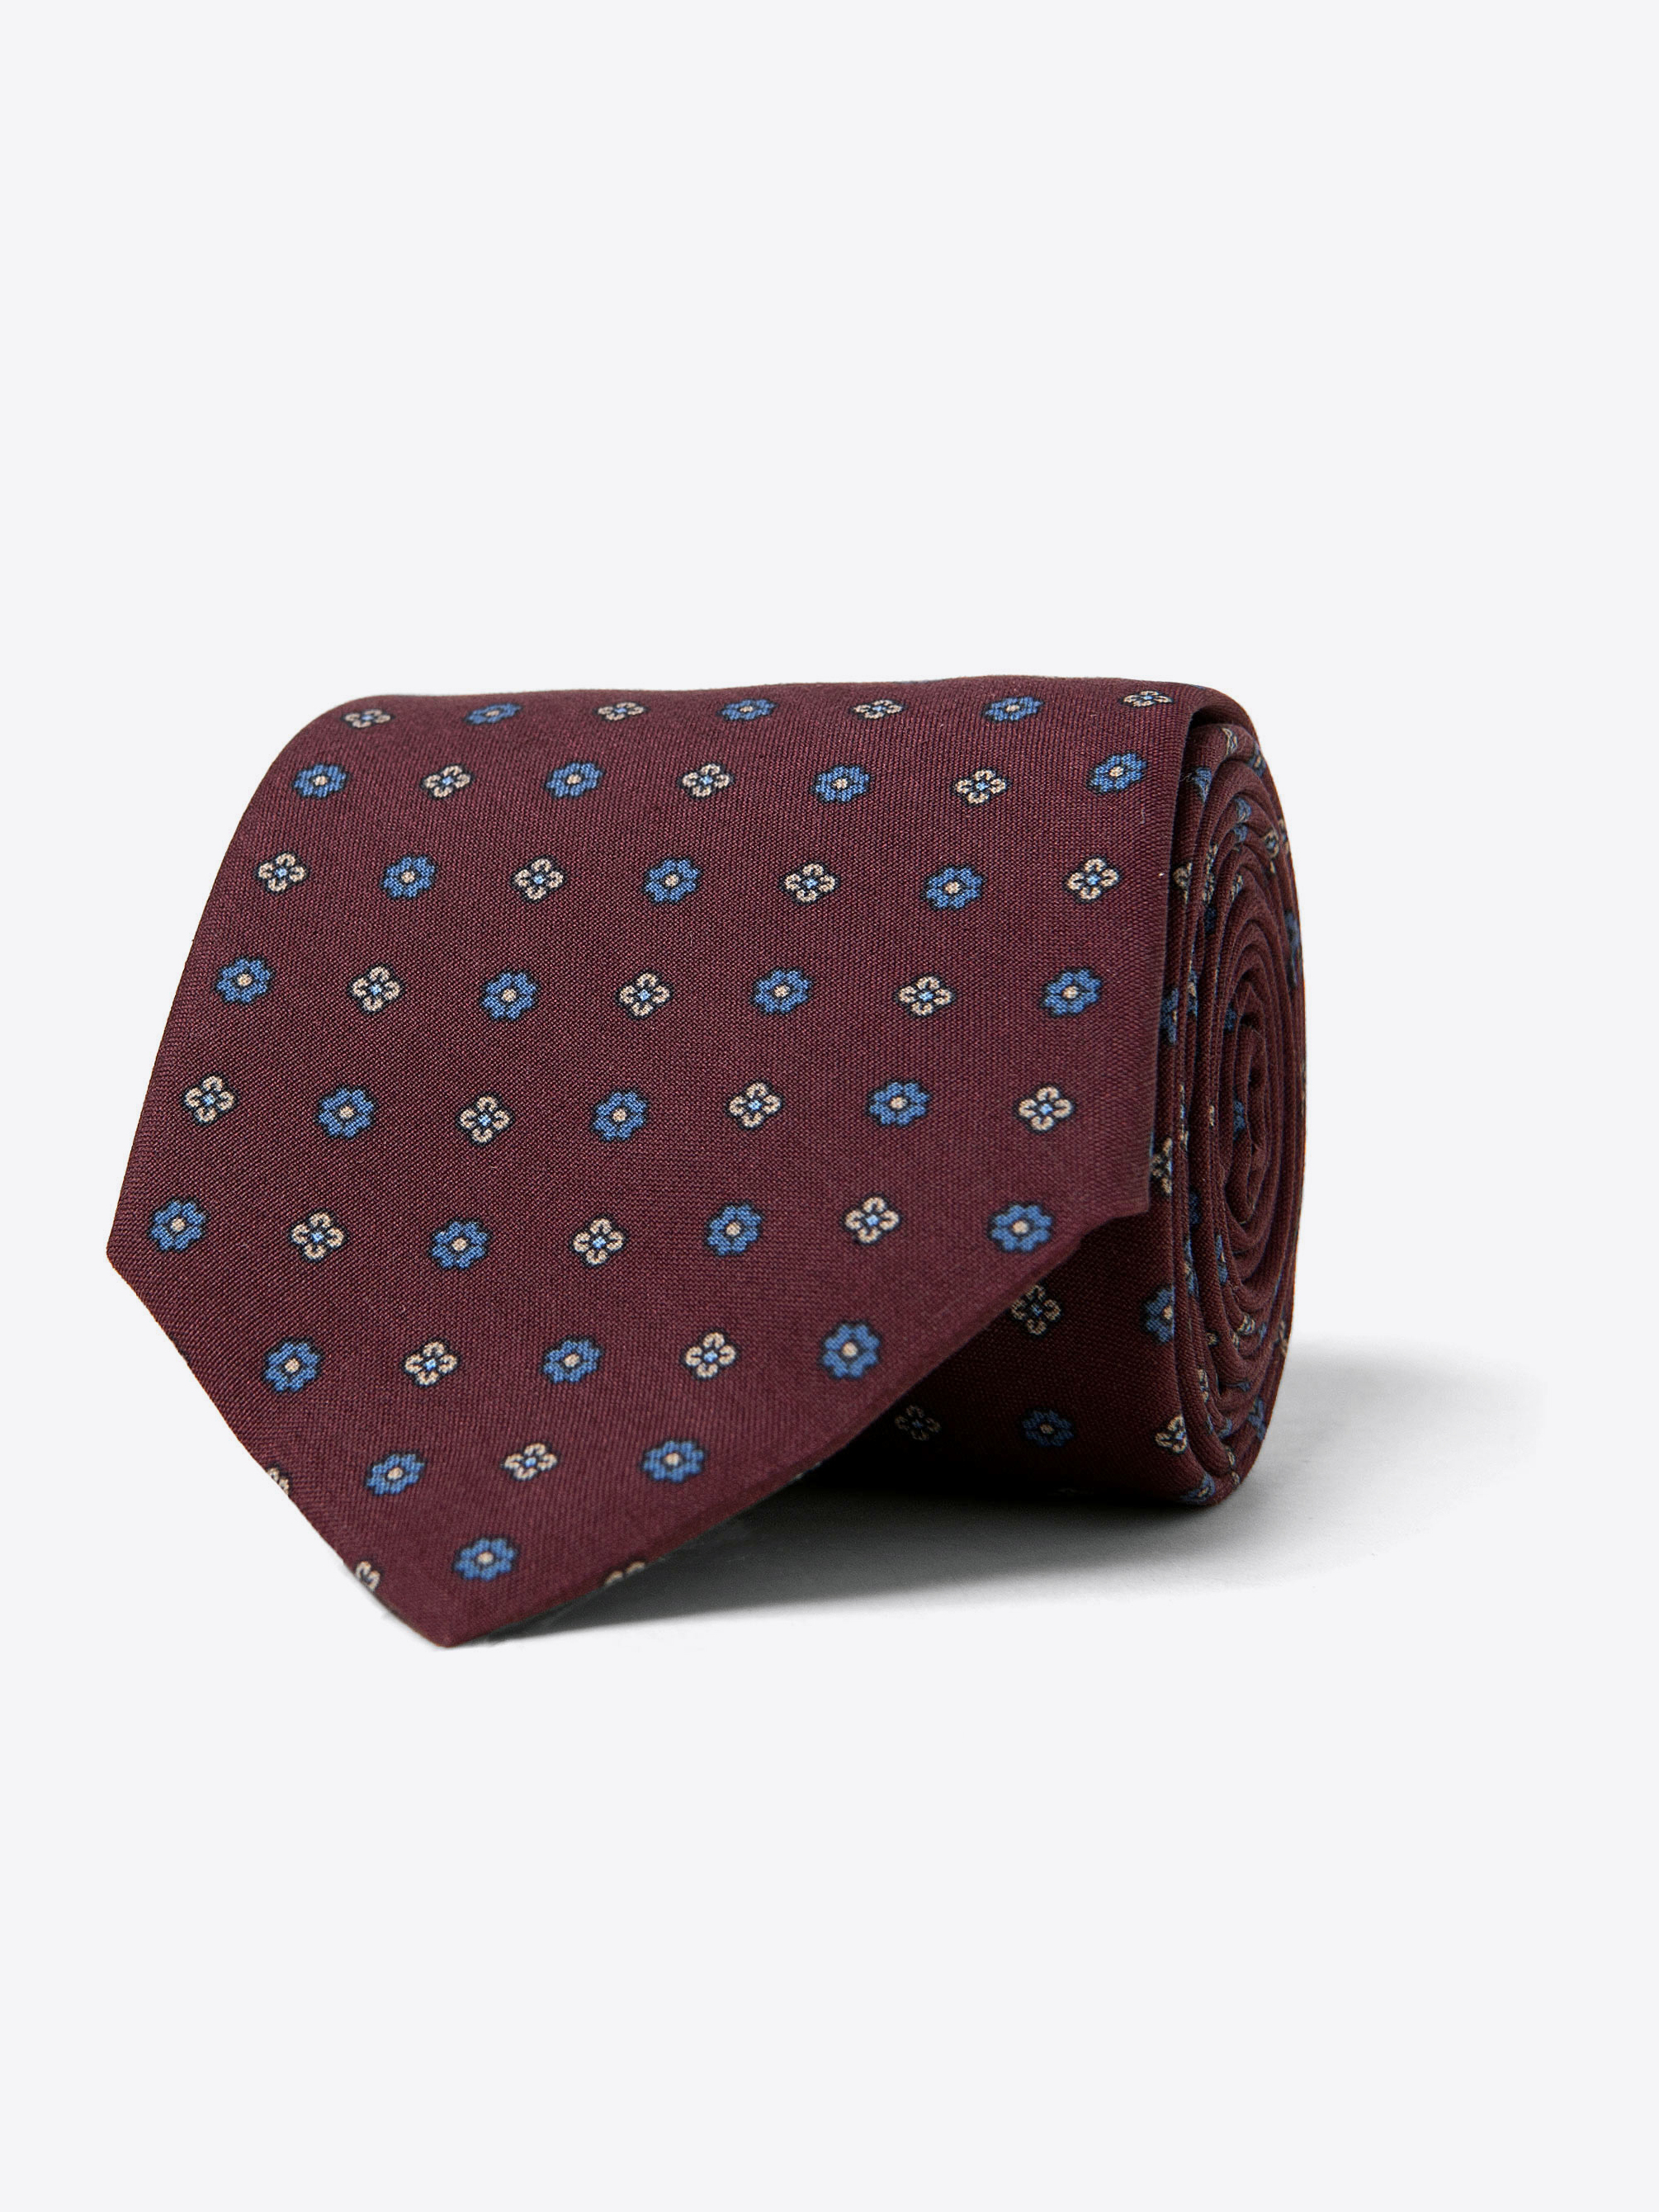 Zoom Image of Burgundy Foulard Madder Silk Tie